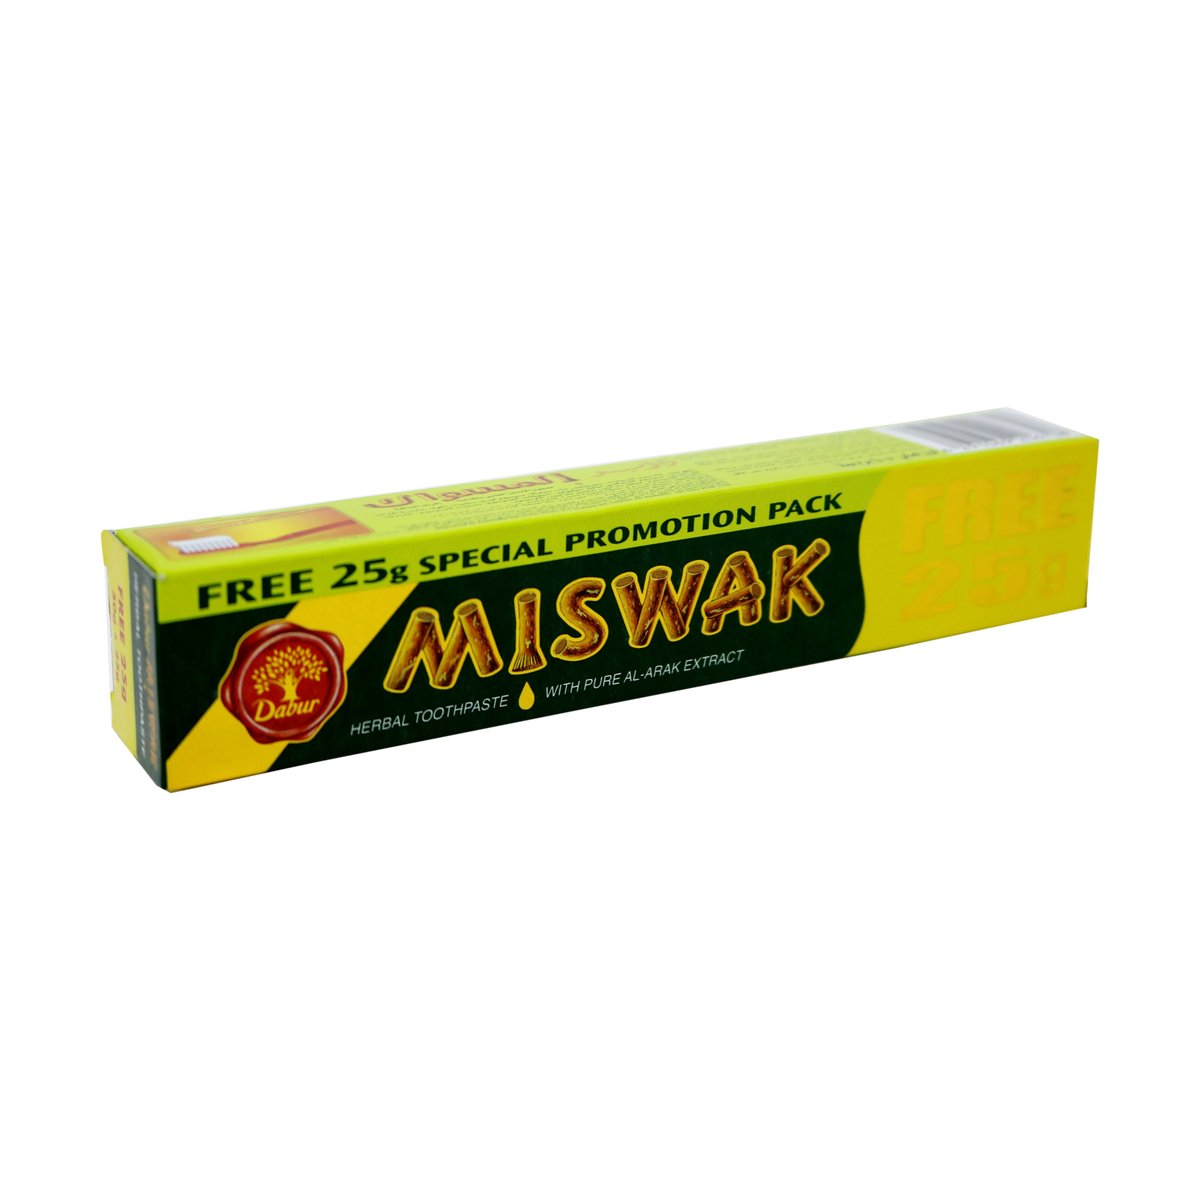 Dabur Miswak Herbal Tooth Paste 50g+25g